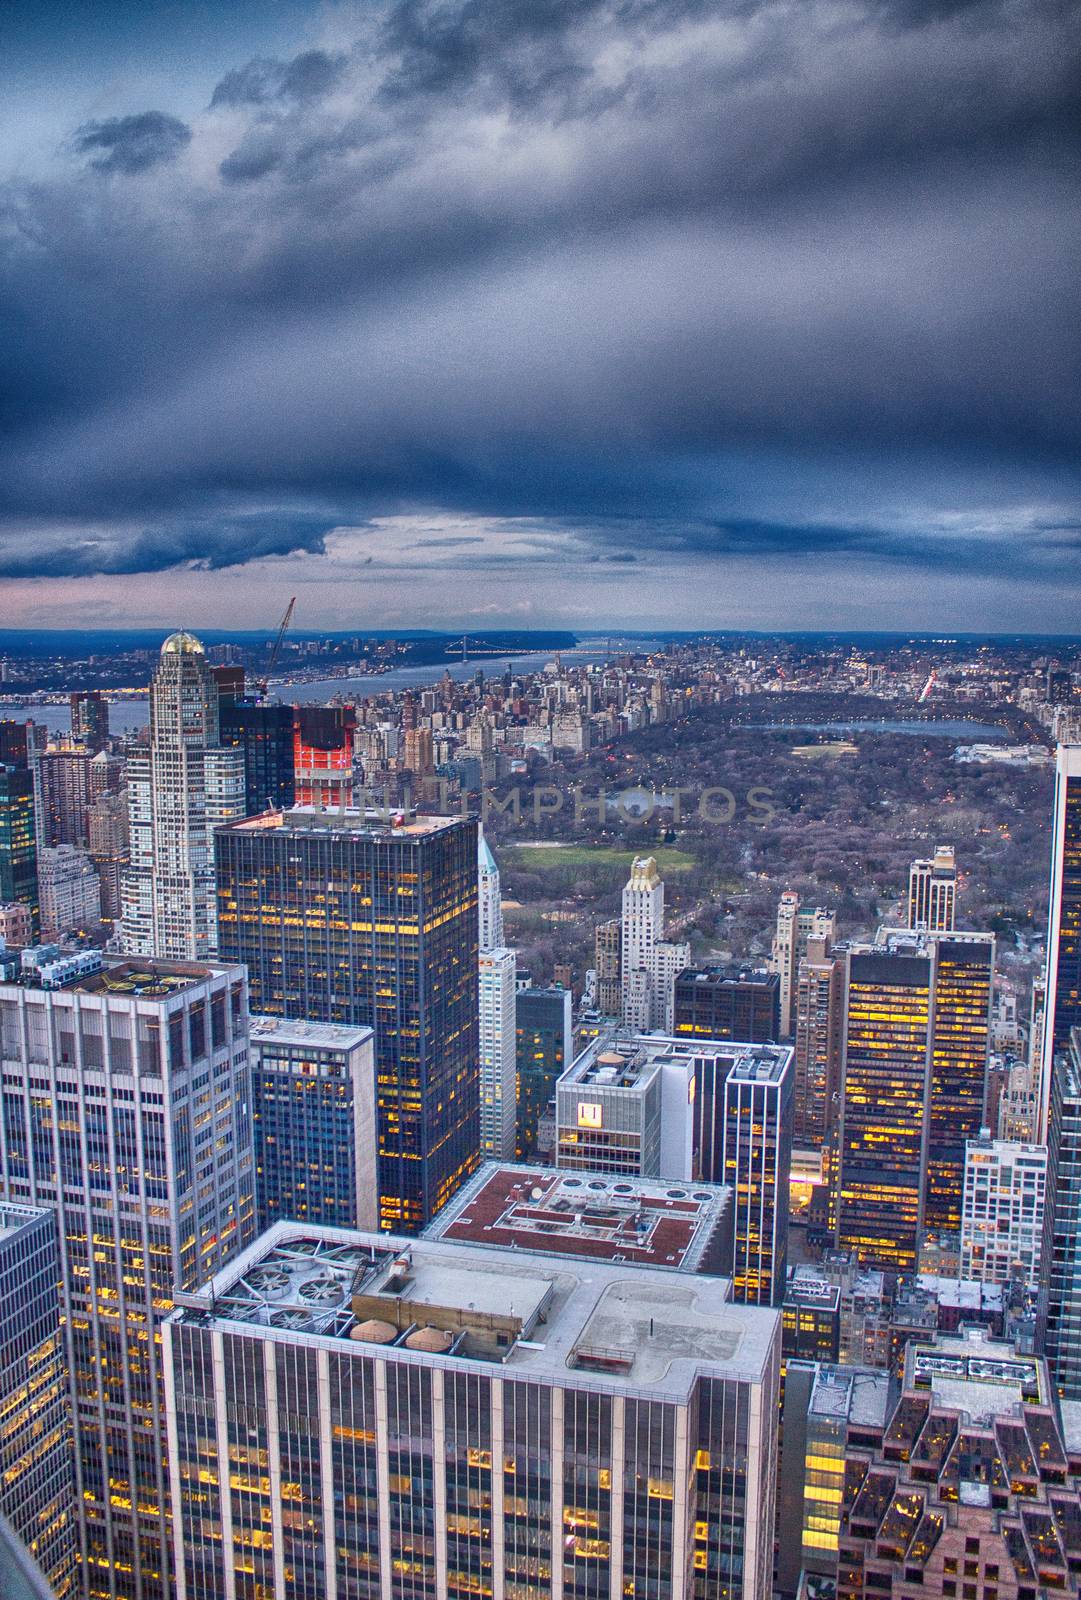 NEW YORK CITY - FEB 12: Cityscape of Manhattan on February 12, 2 by jovannig